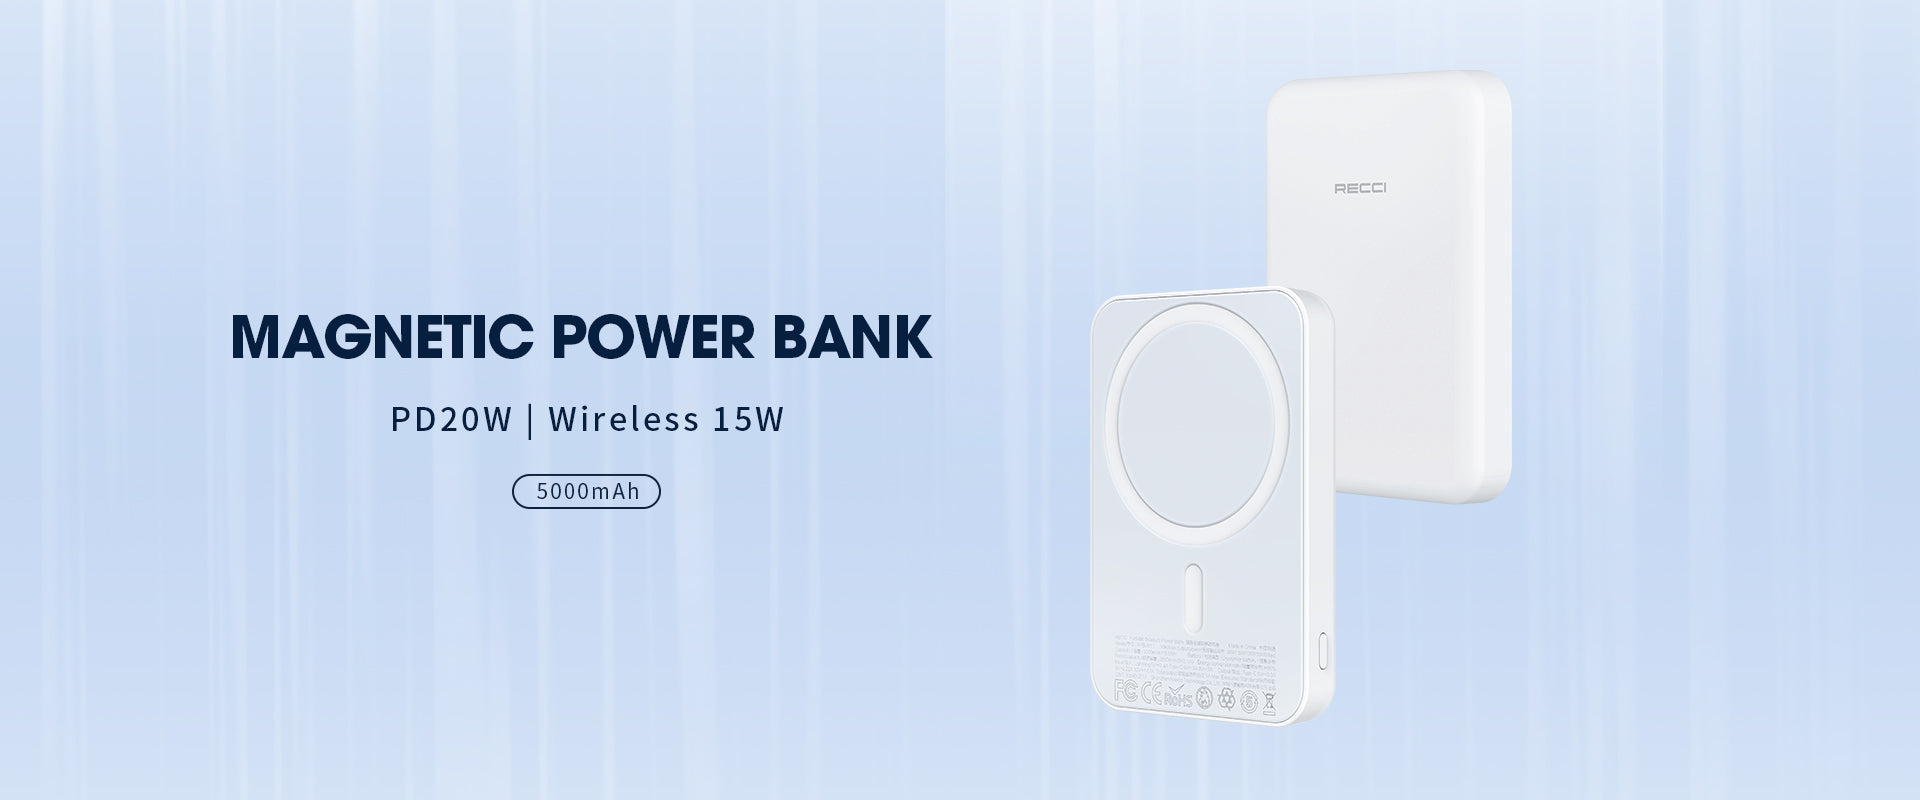 RPB-W11 netic Power BankMag